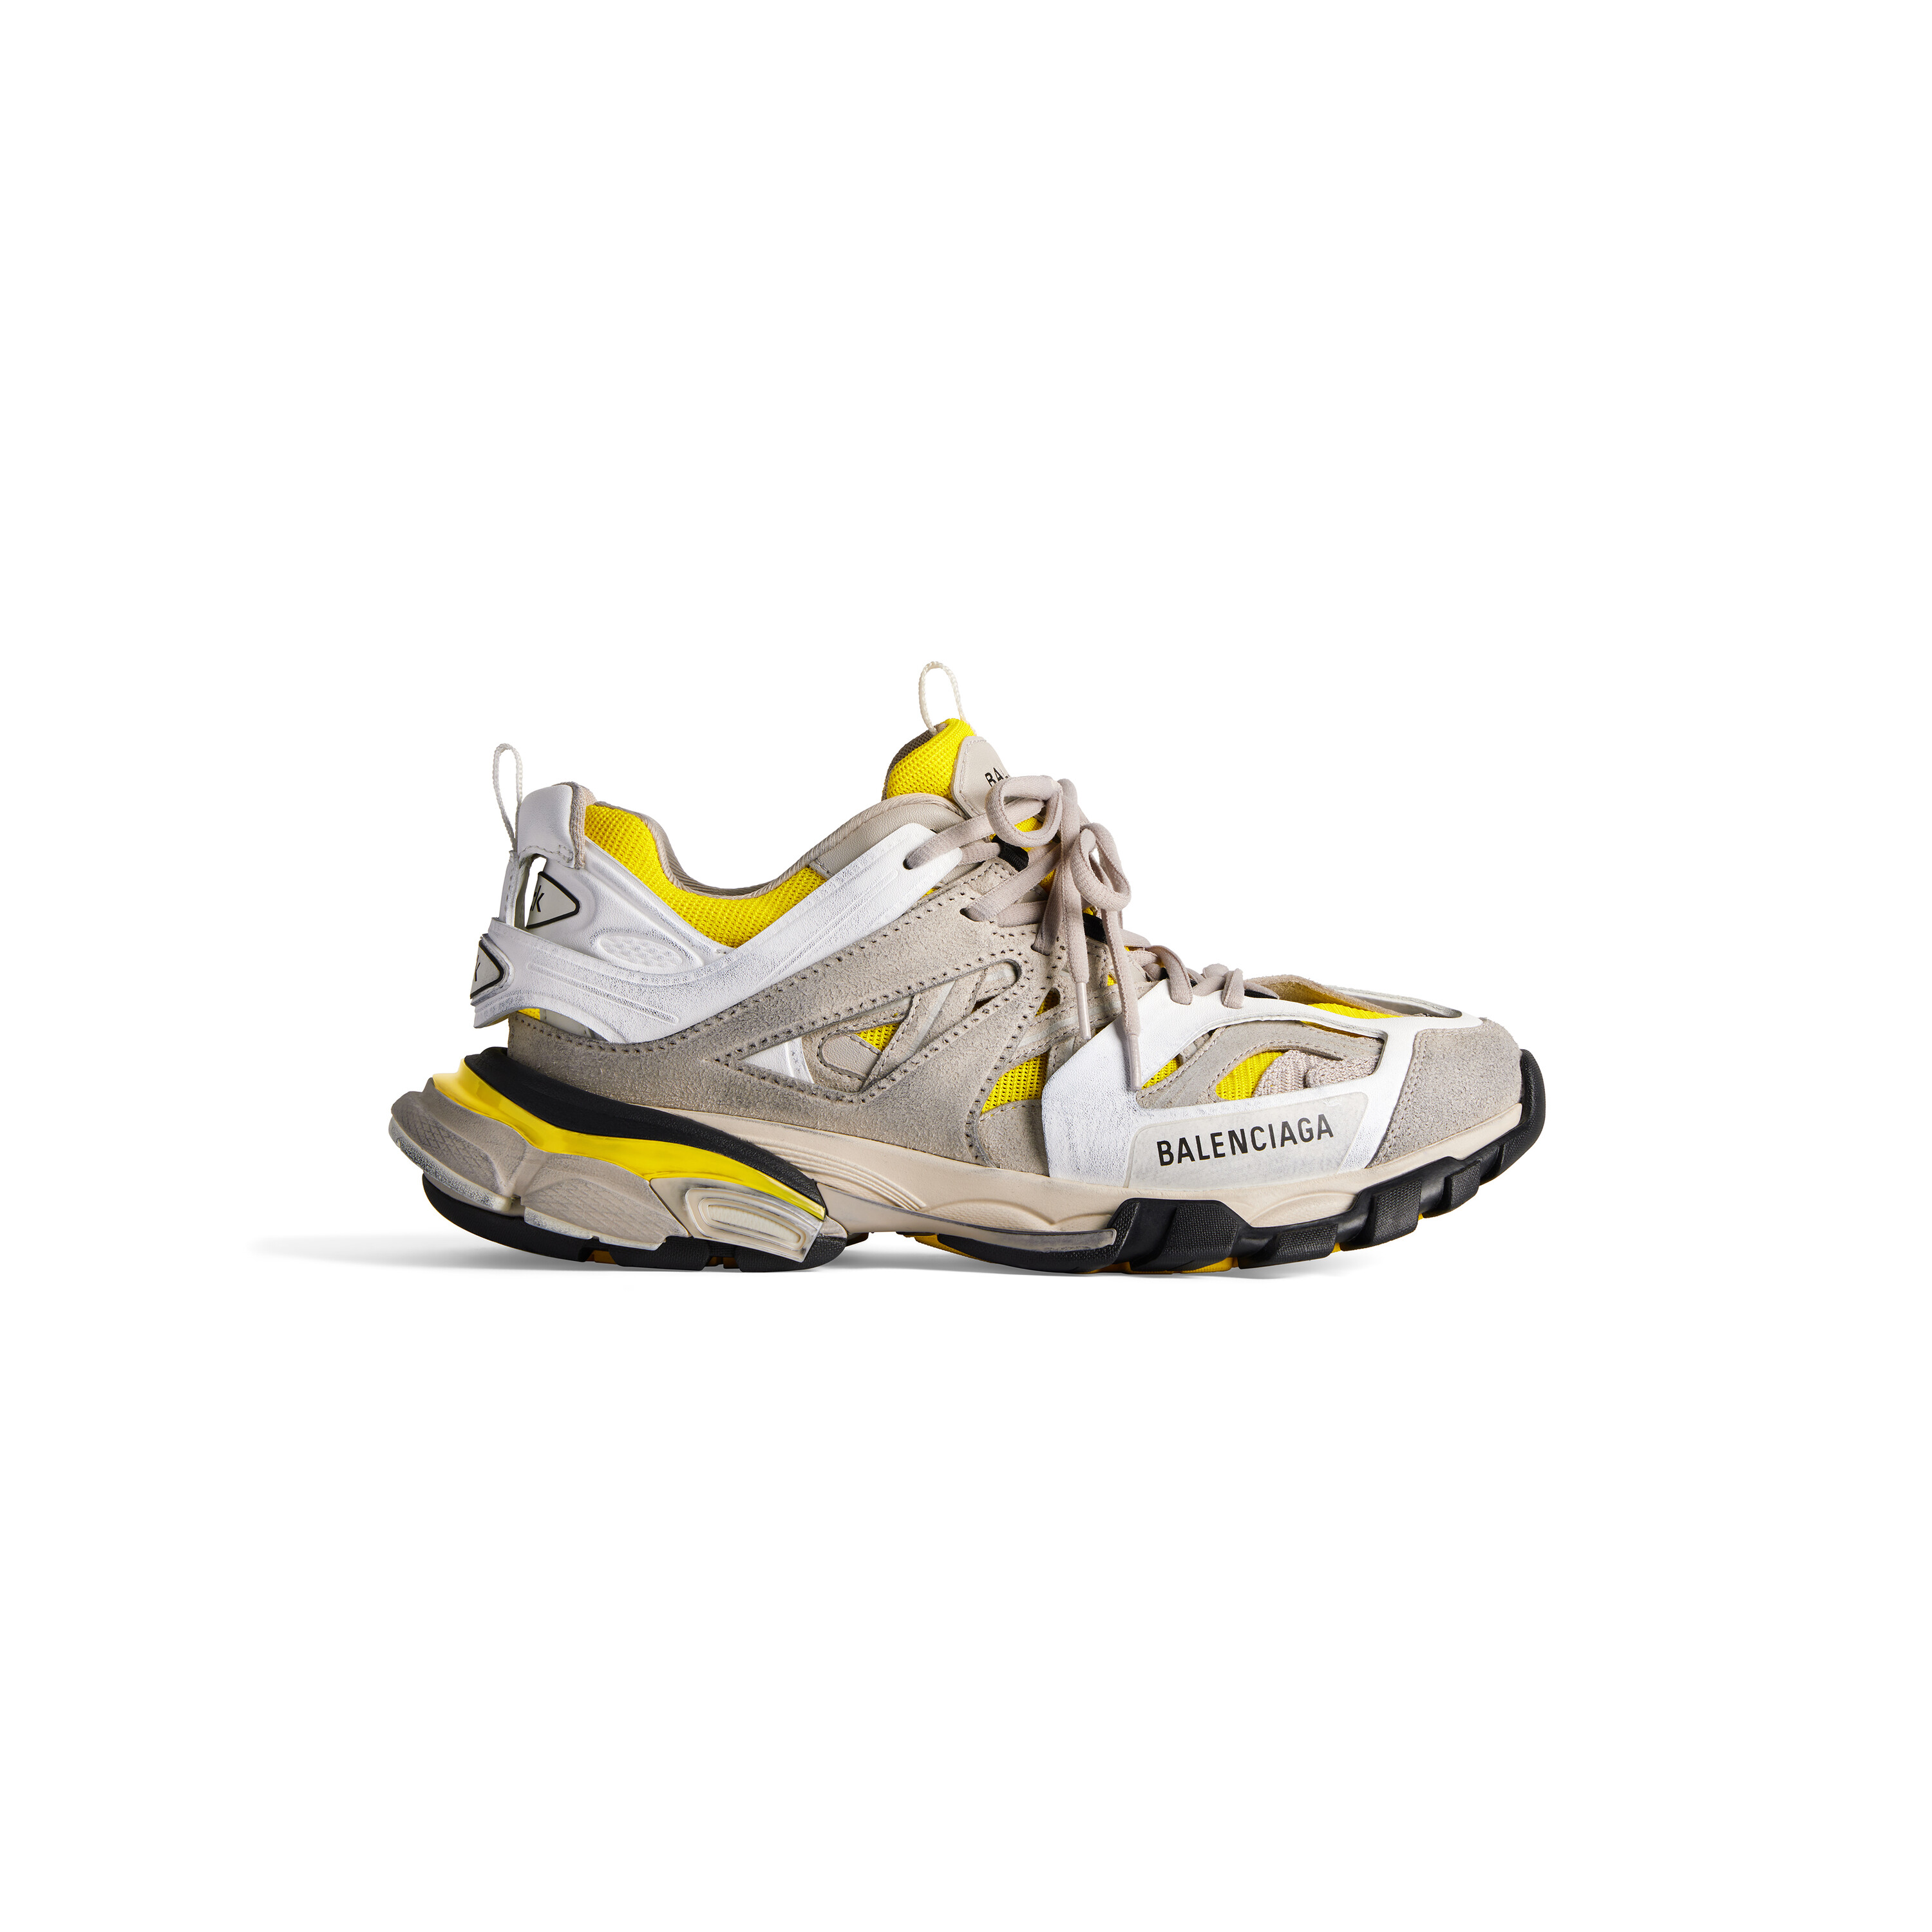 Men's Track Sneaker in Yellow/white/beige/grey/black | Balenciaga US